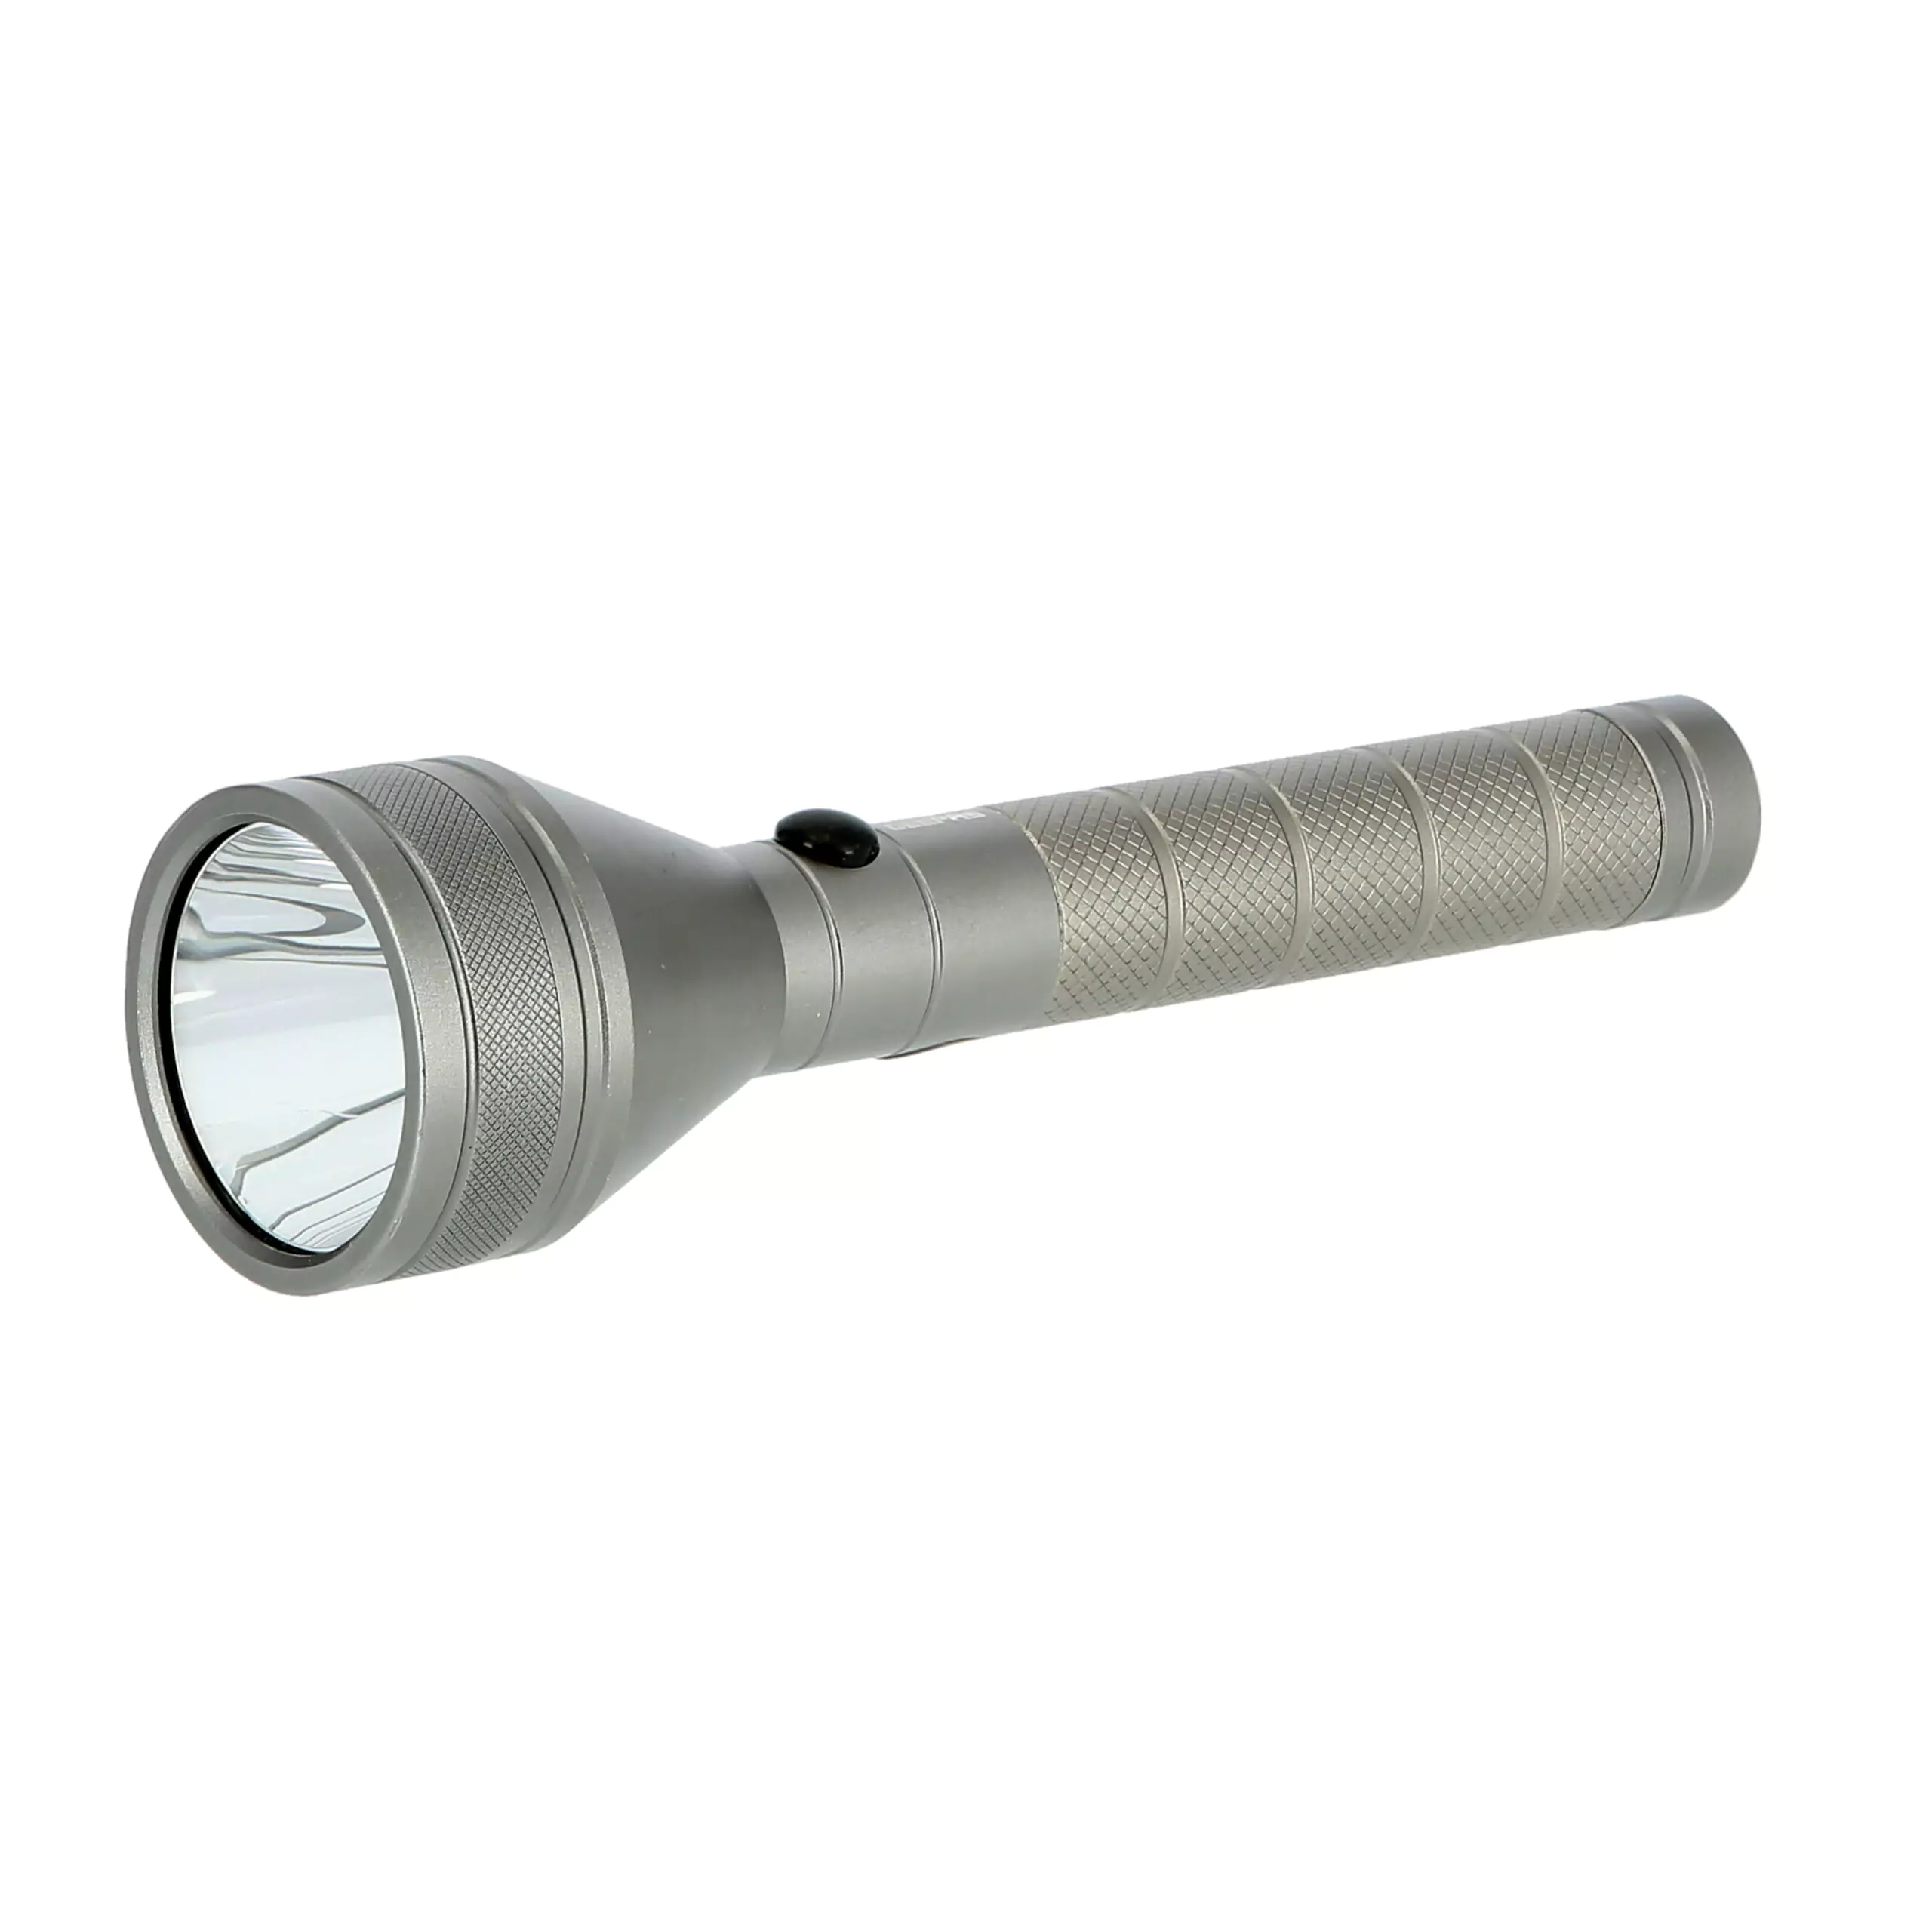 Geepas Flashlight with a capacity of 1800 mAh - GFL 51025